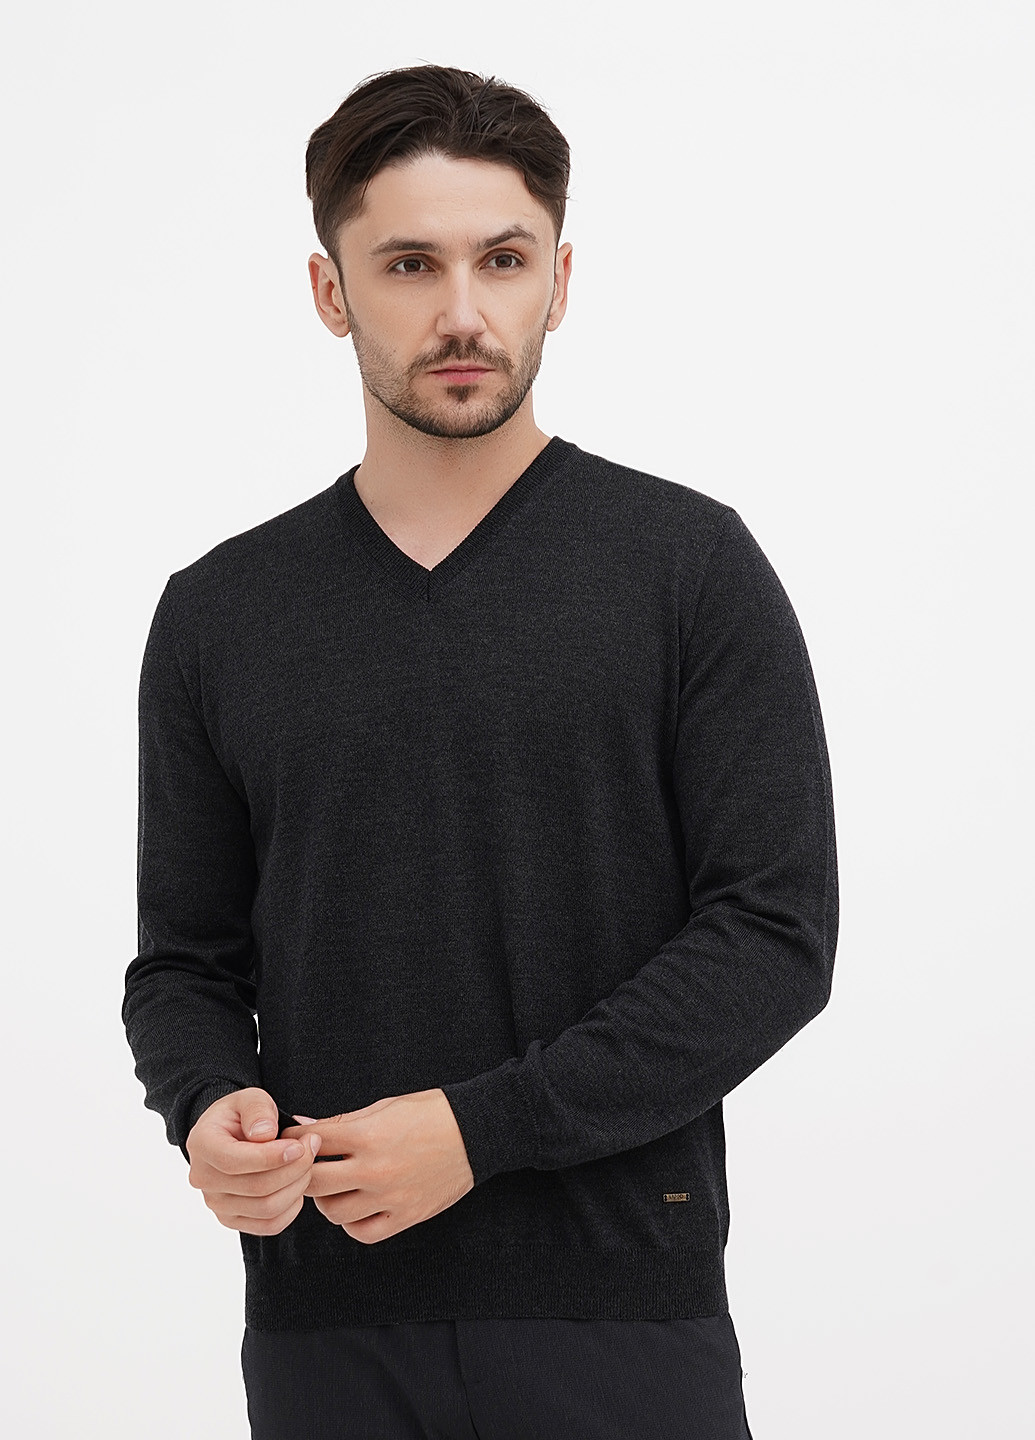 Темно-серый демисезонный пуловер пуловер Liu Jo